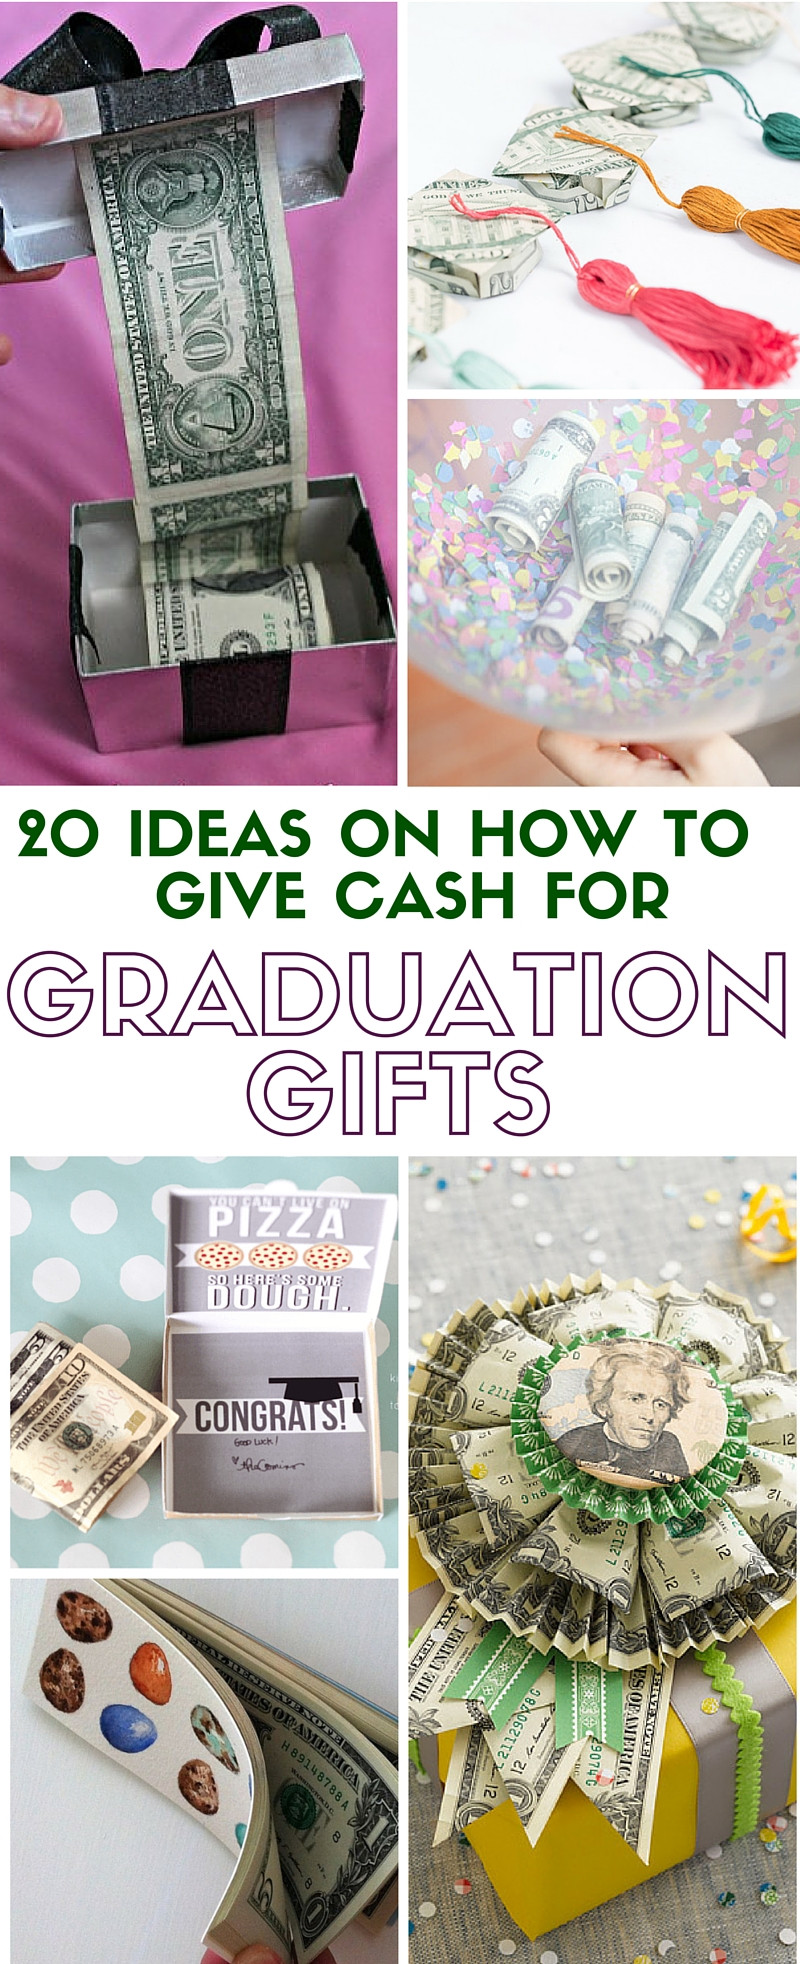 Graduation Gift Ideas For College Graduates
 31 Back To School Teacher Gift Ideas The Crafty Blog Stalker